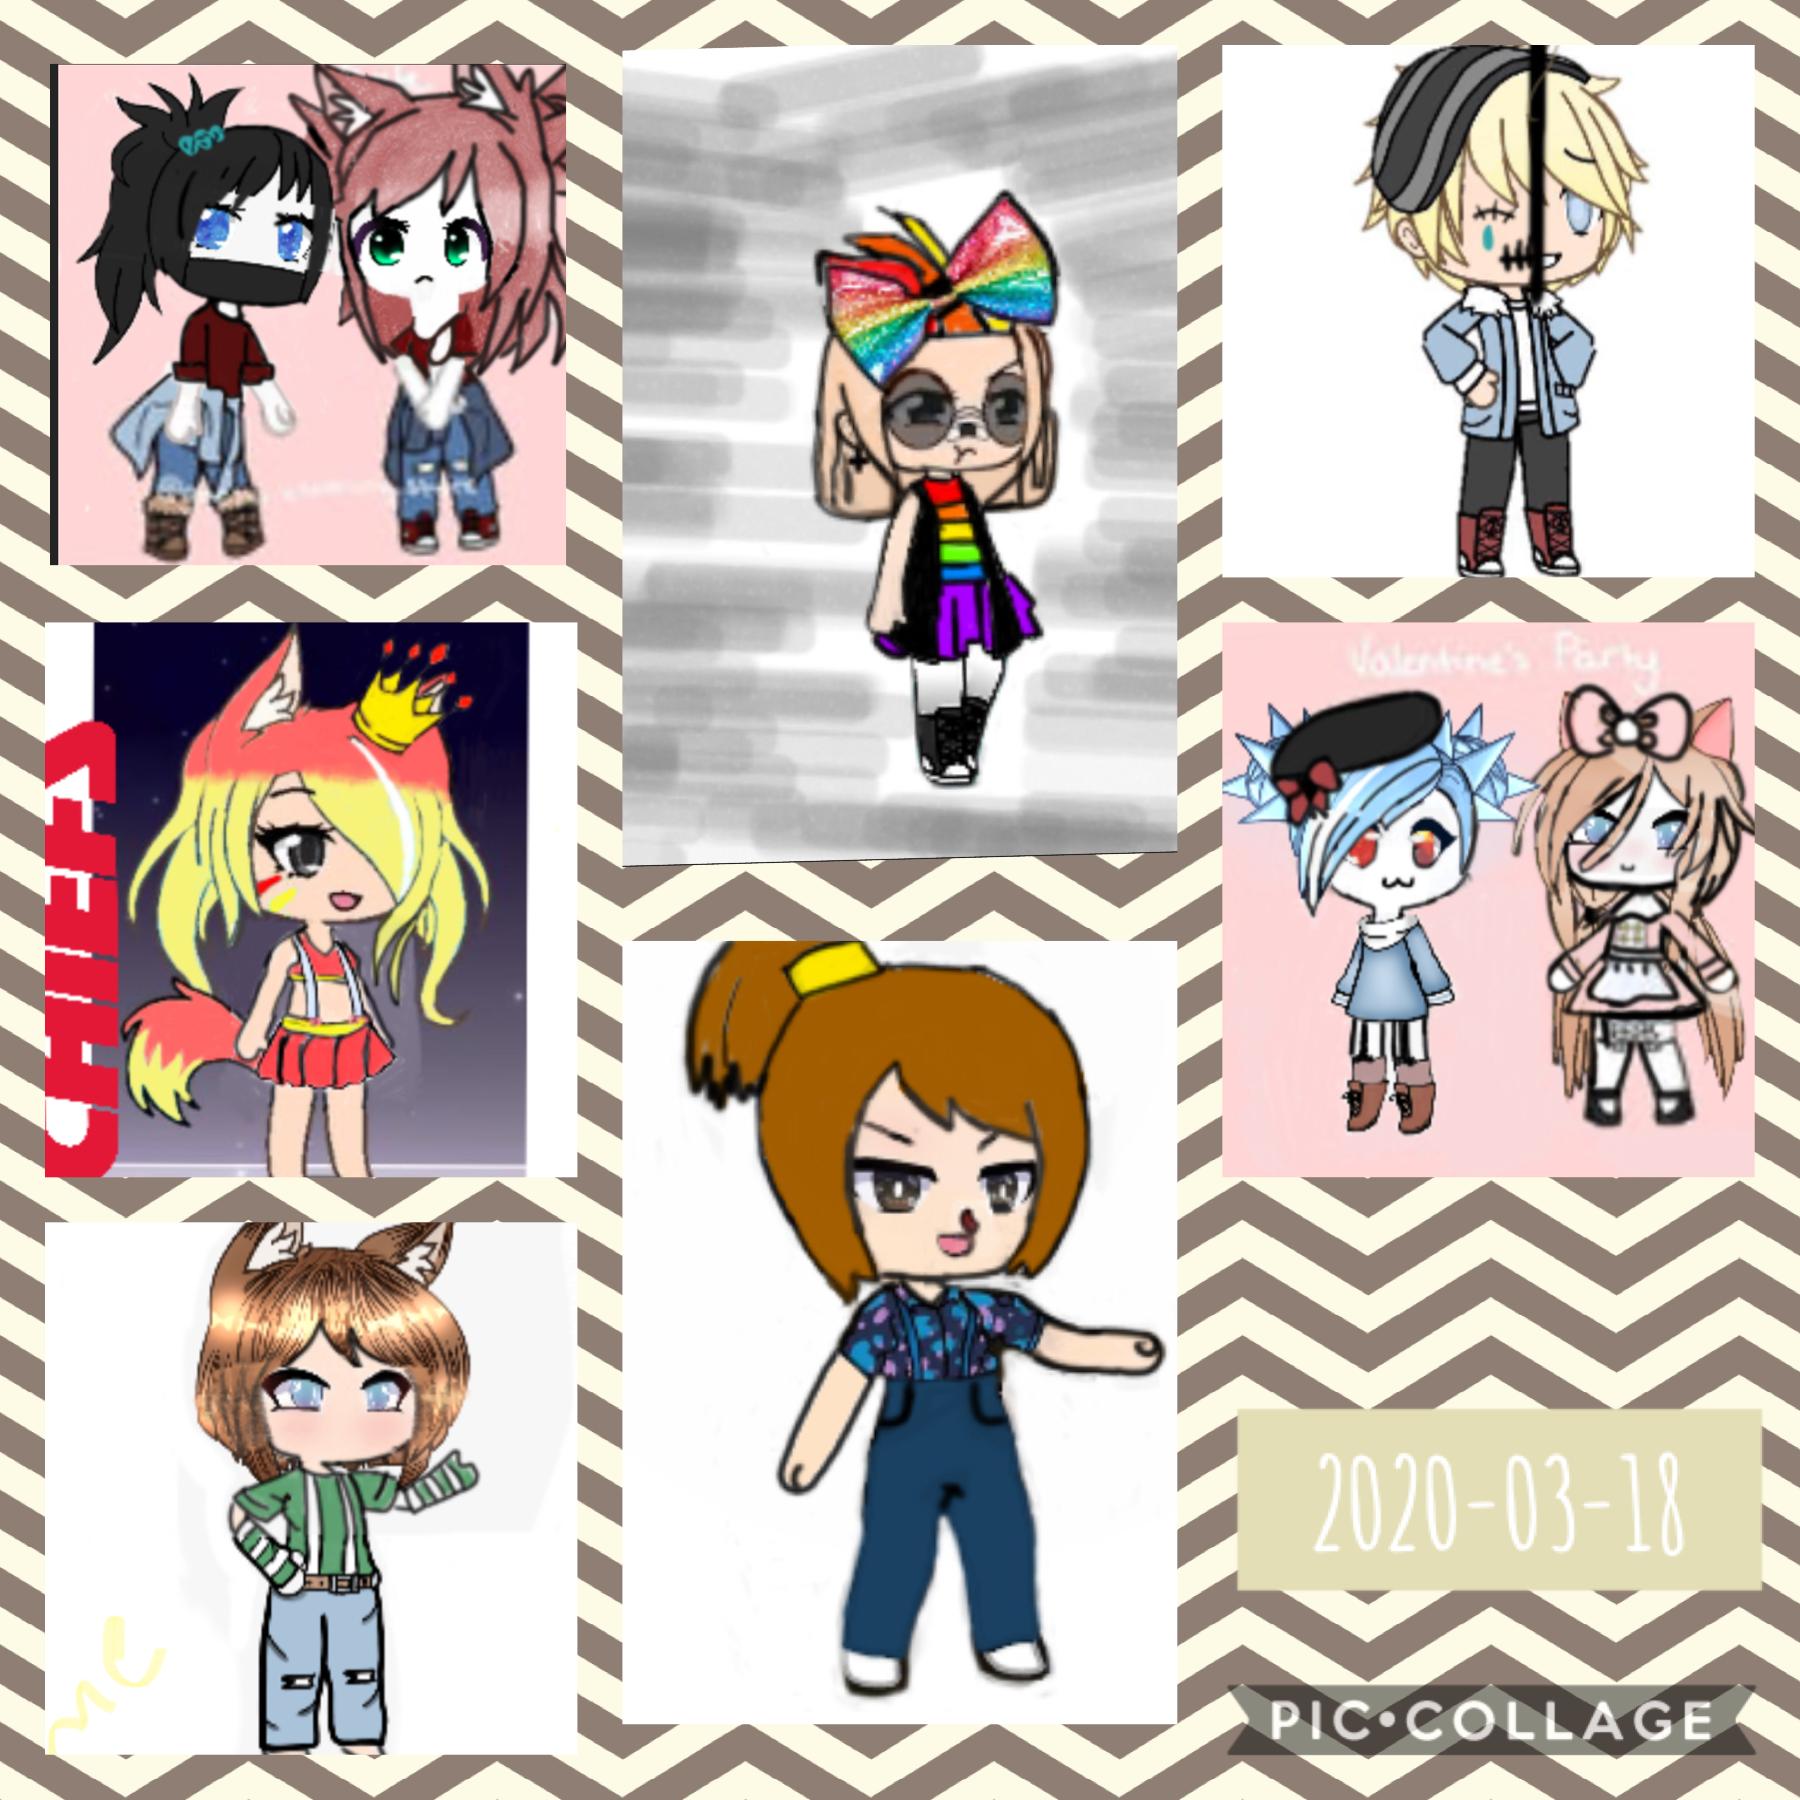 My gacha life characters that I edited